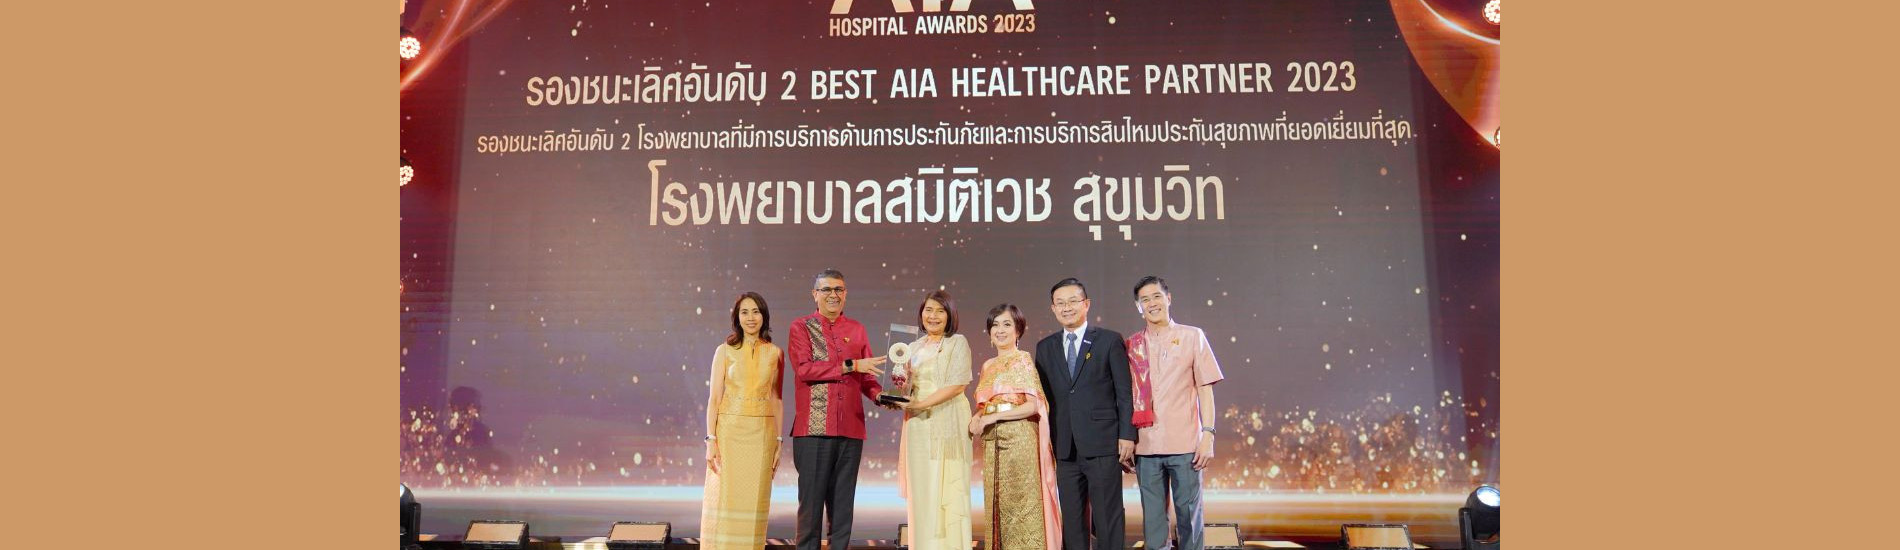 Samitivej Receives Best AIA Healthcare Partner 2023 Award at the AIA Hospital Awards 2023